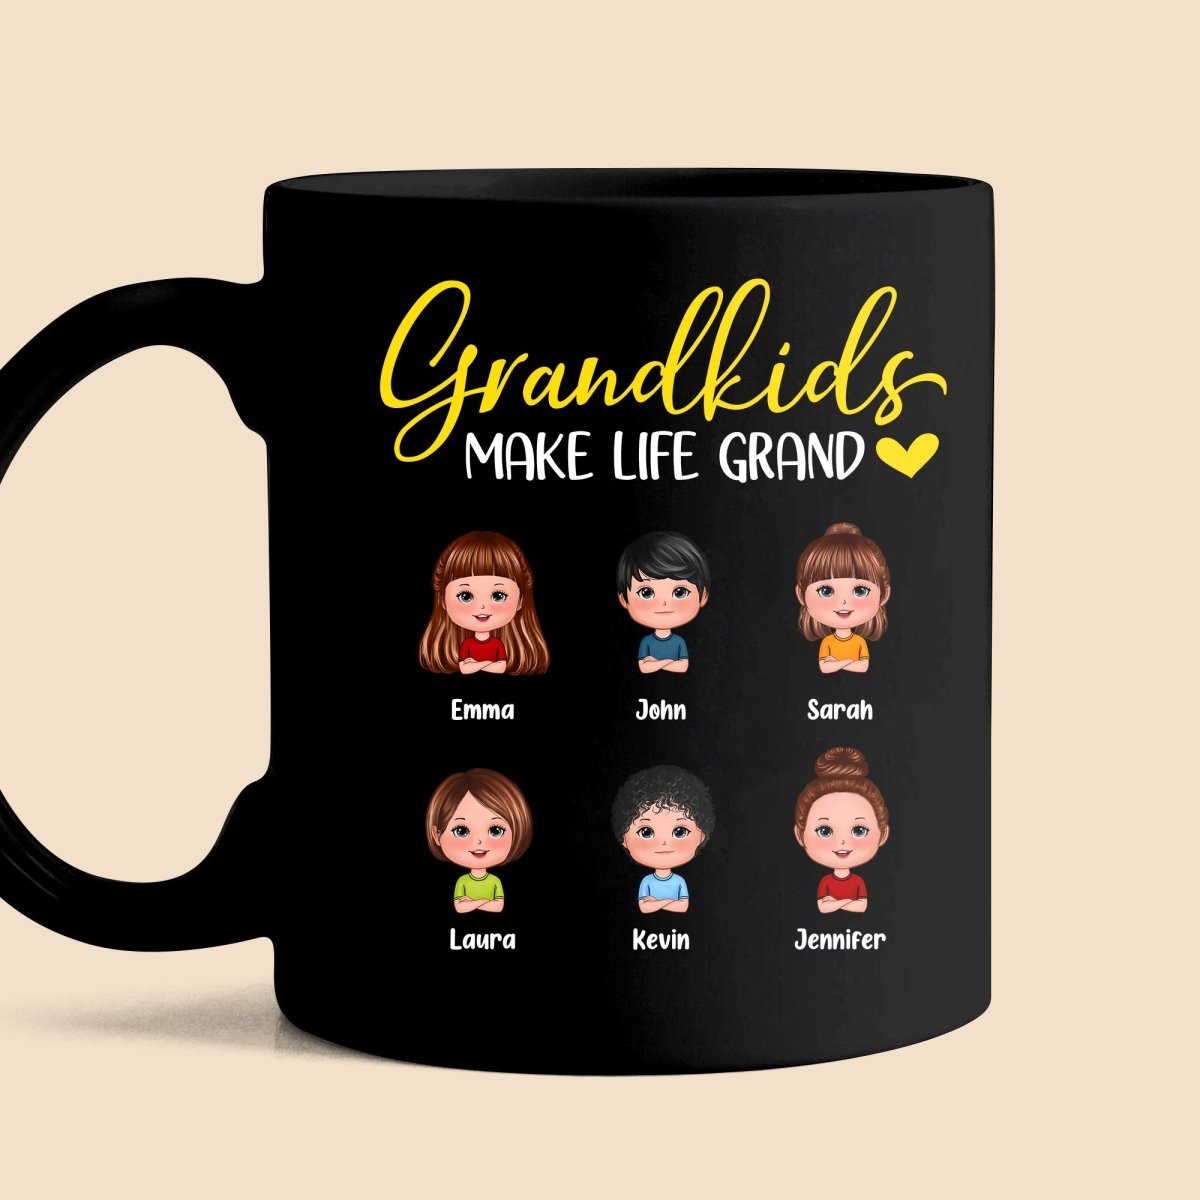 Grandkids Make Life Grand - Personalized Black Mug - Best Gift For Mother, Grandma, Father, Grandpa